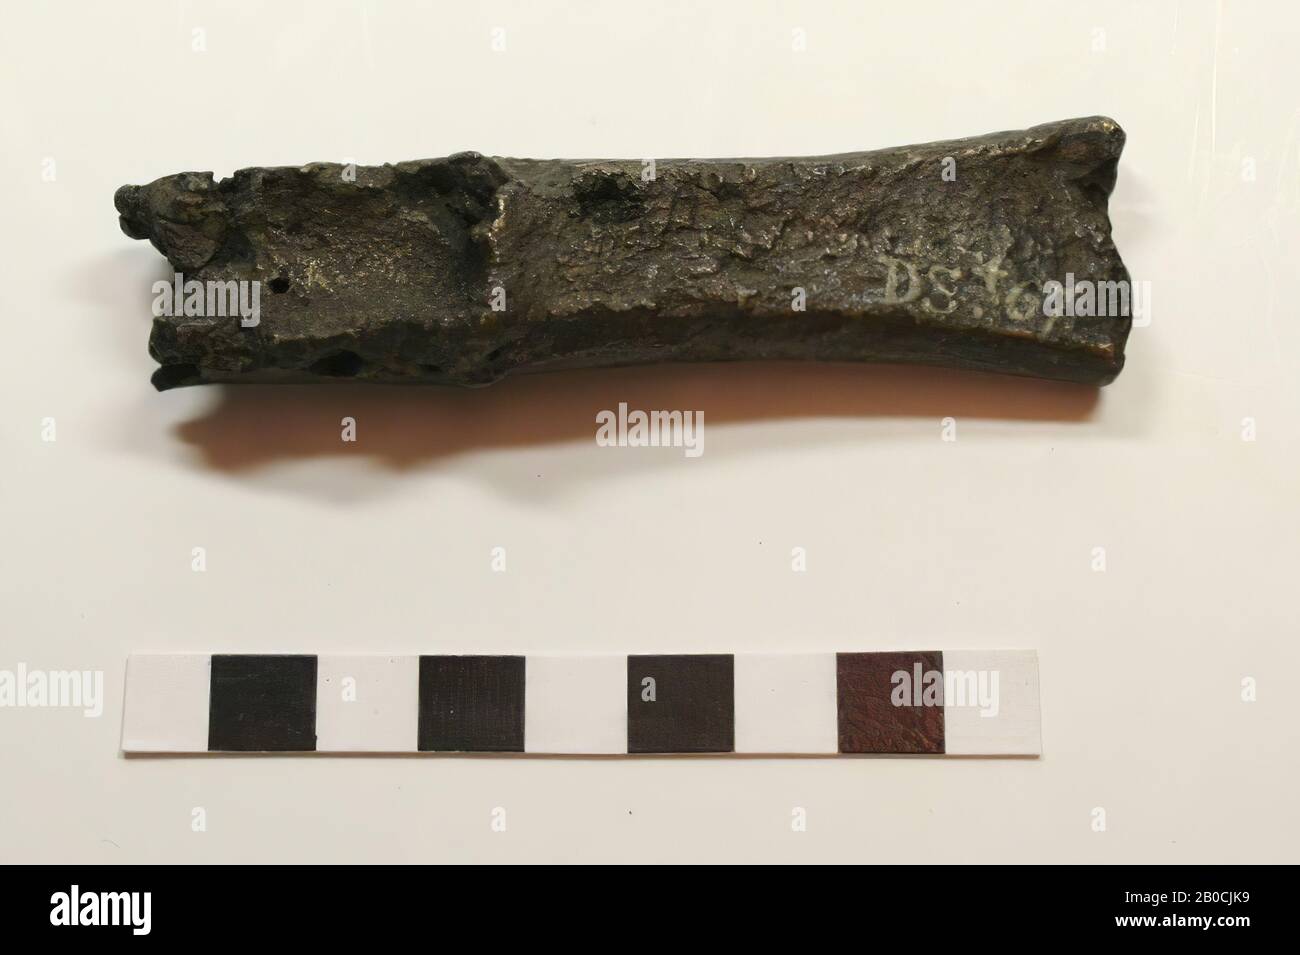 Krom flint knife with 1 saw-shaped side (with teeth)., Knife, stone, flint, 1 x 3.7 x 15 cm, prehistoric, Denmark, unknown, unknown, unknown Stock Photo